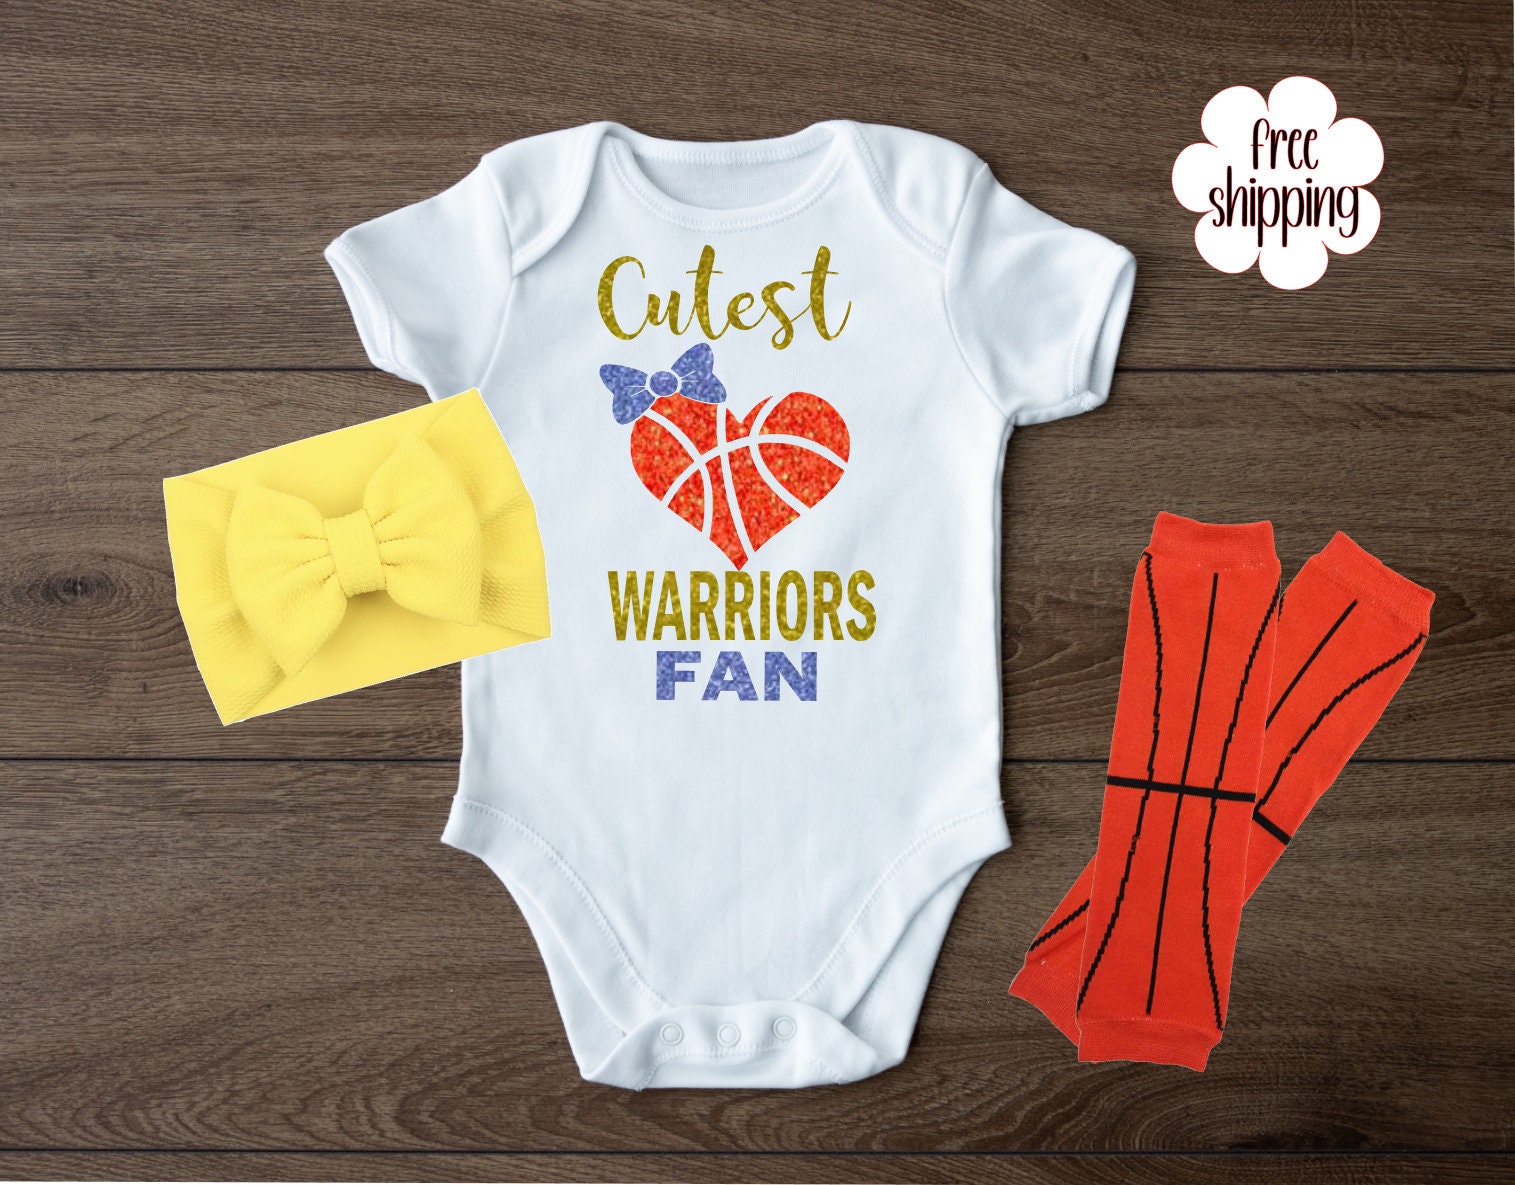 Golden State Warriors Stephen Curry The Goat Merchandise Baby Onesie